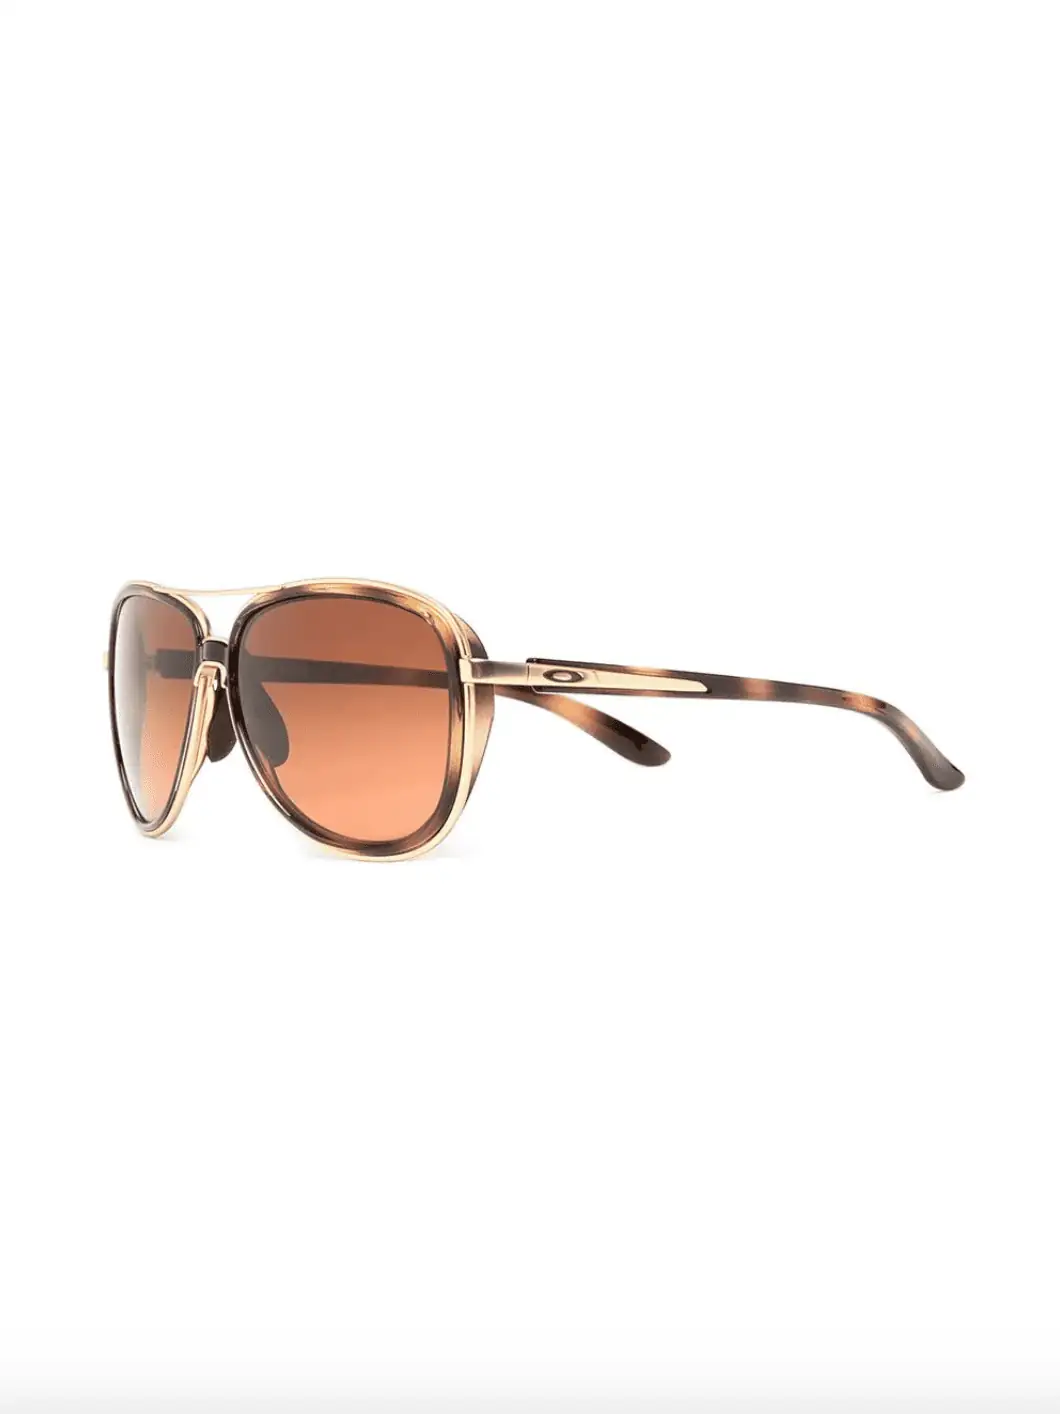 Kyle Richards' Havana Pilot Sunglasses